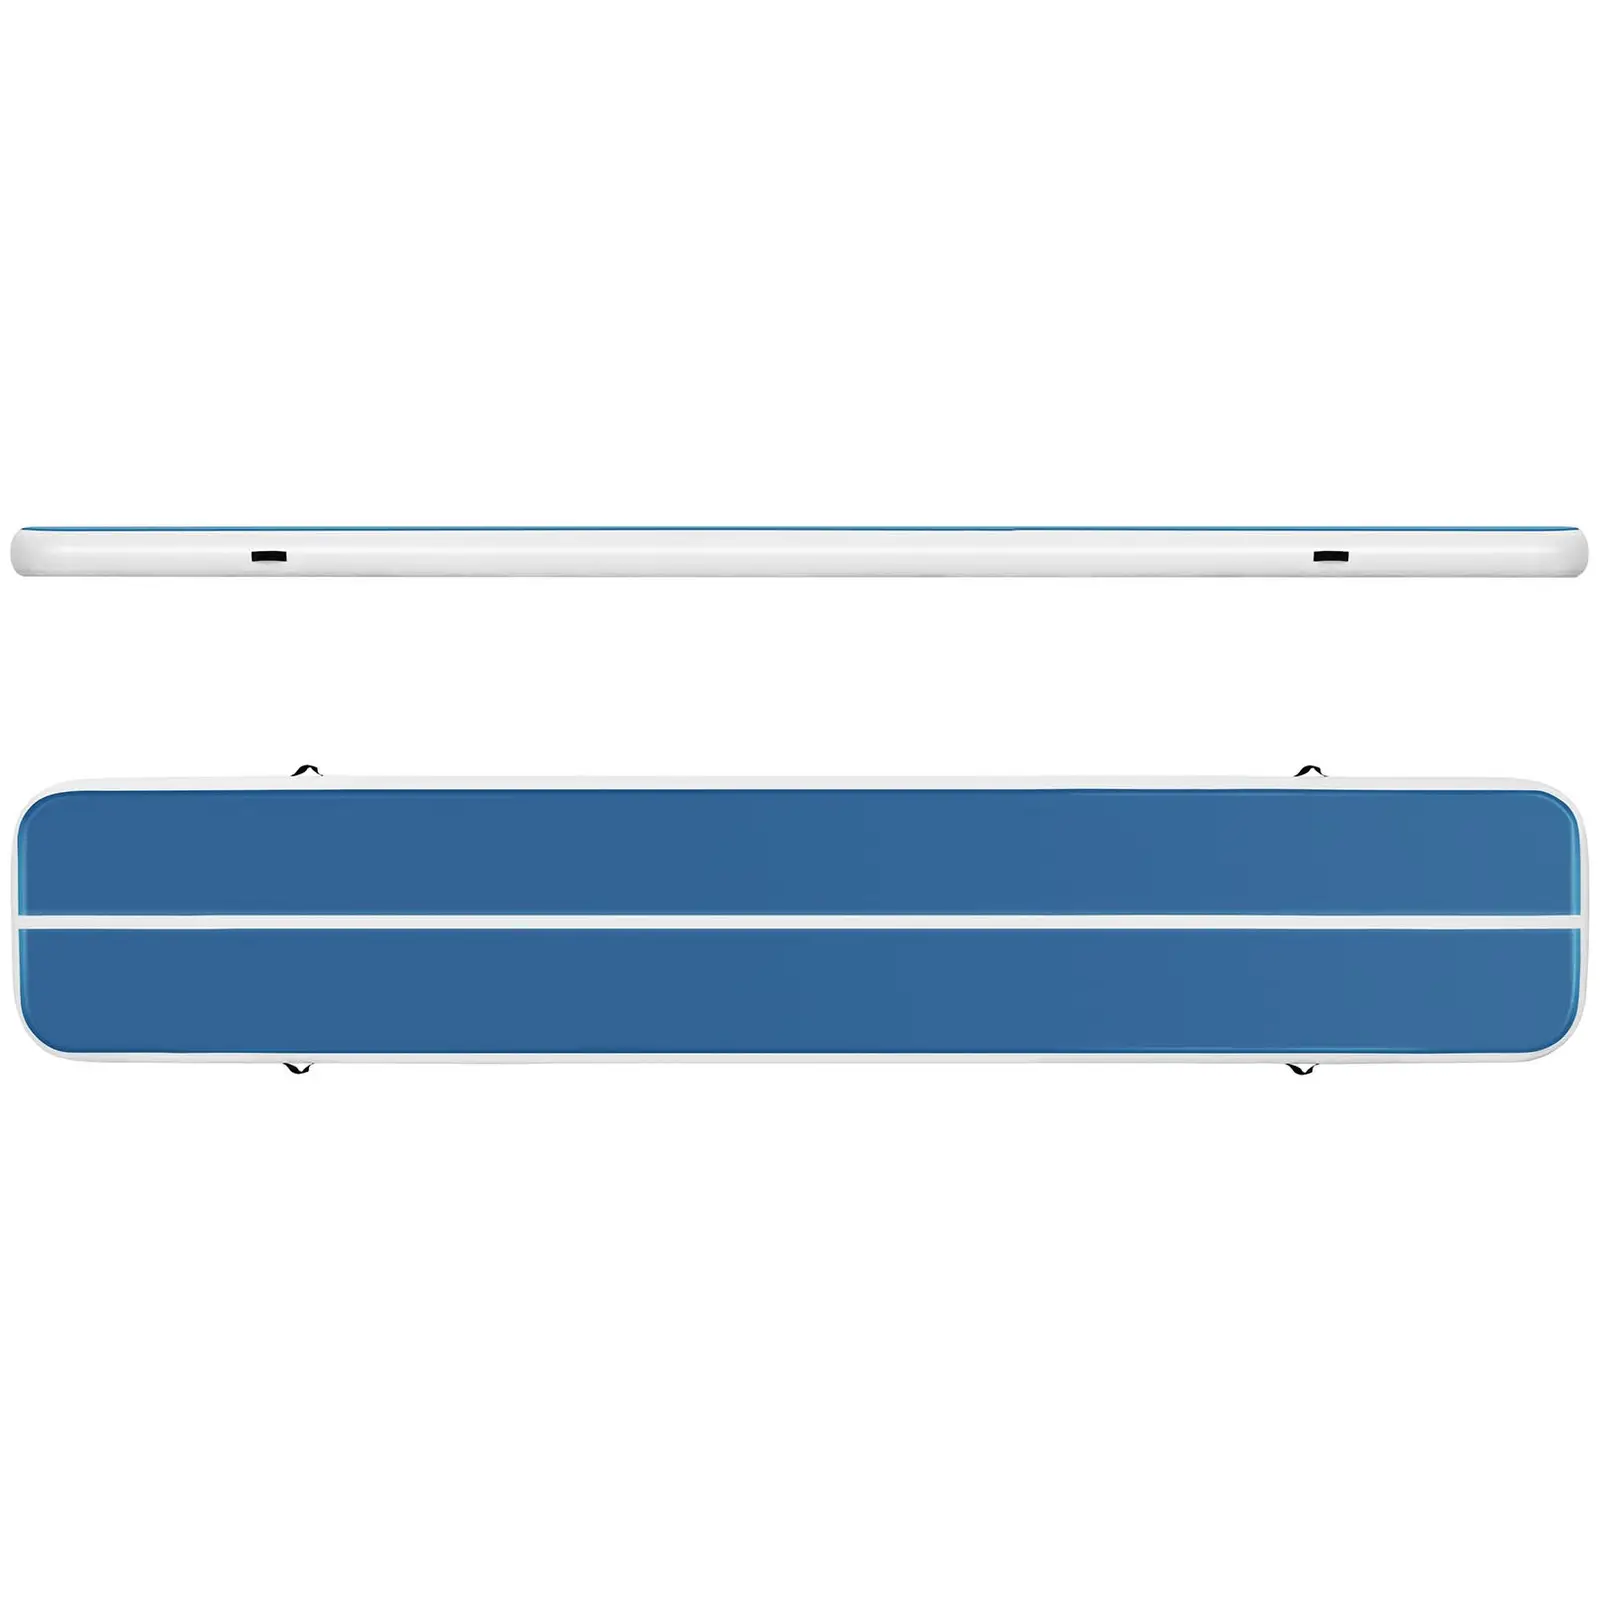 Uppblåsbar gymnastikmatta - 600 x 100 x 20 cm - blå och vit